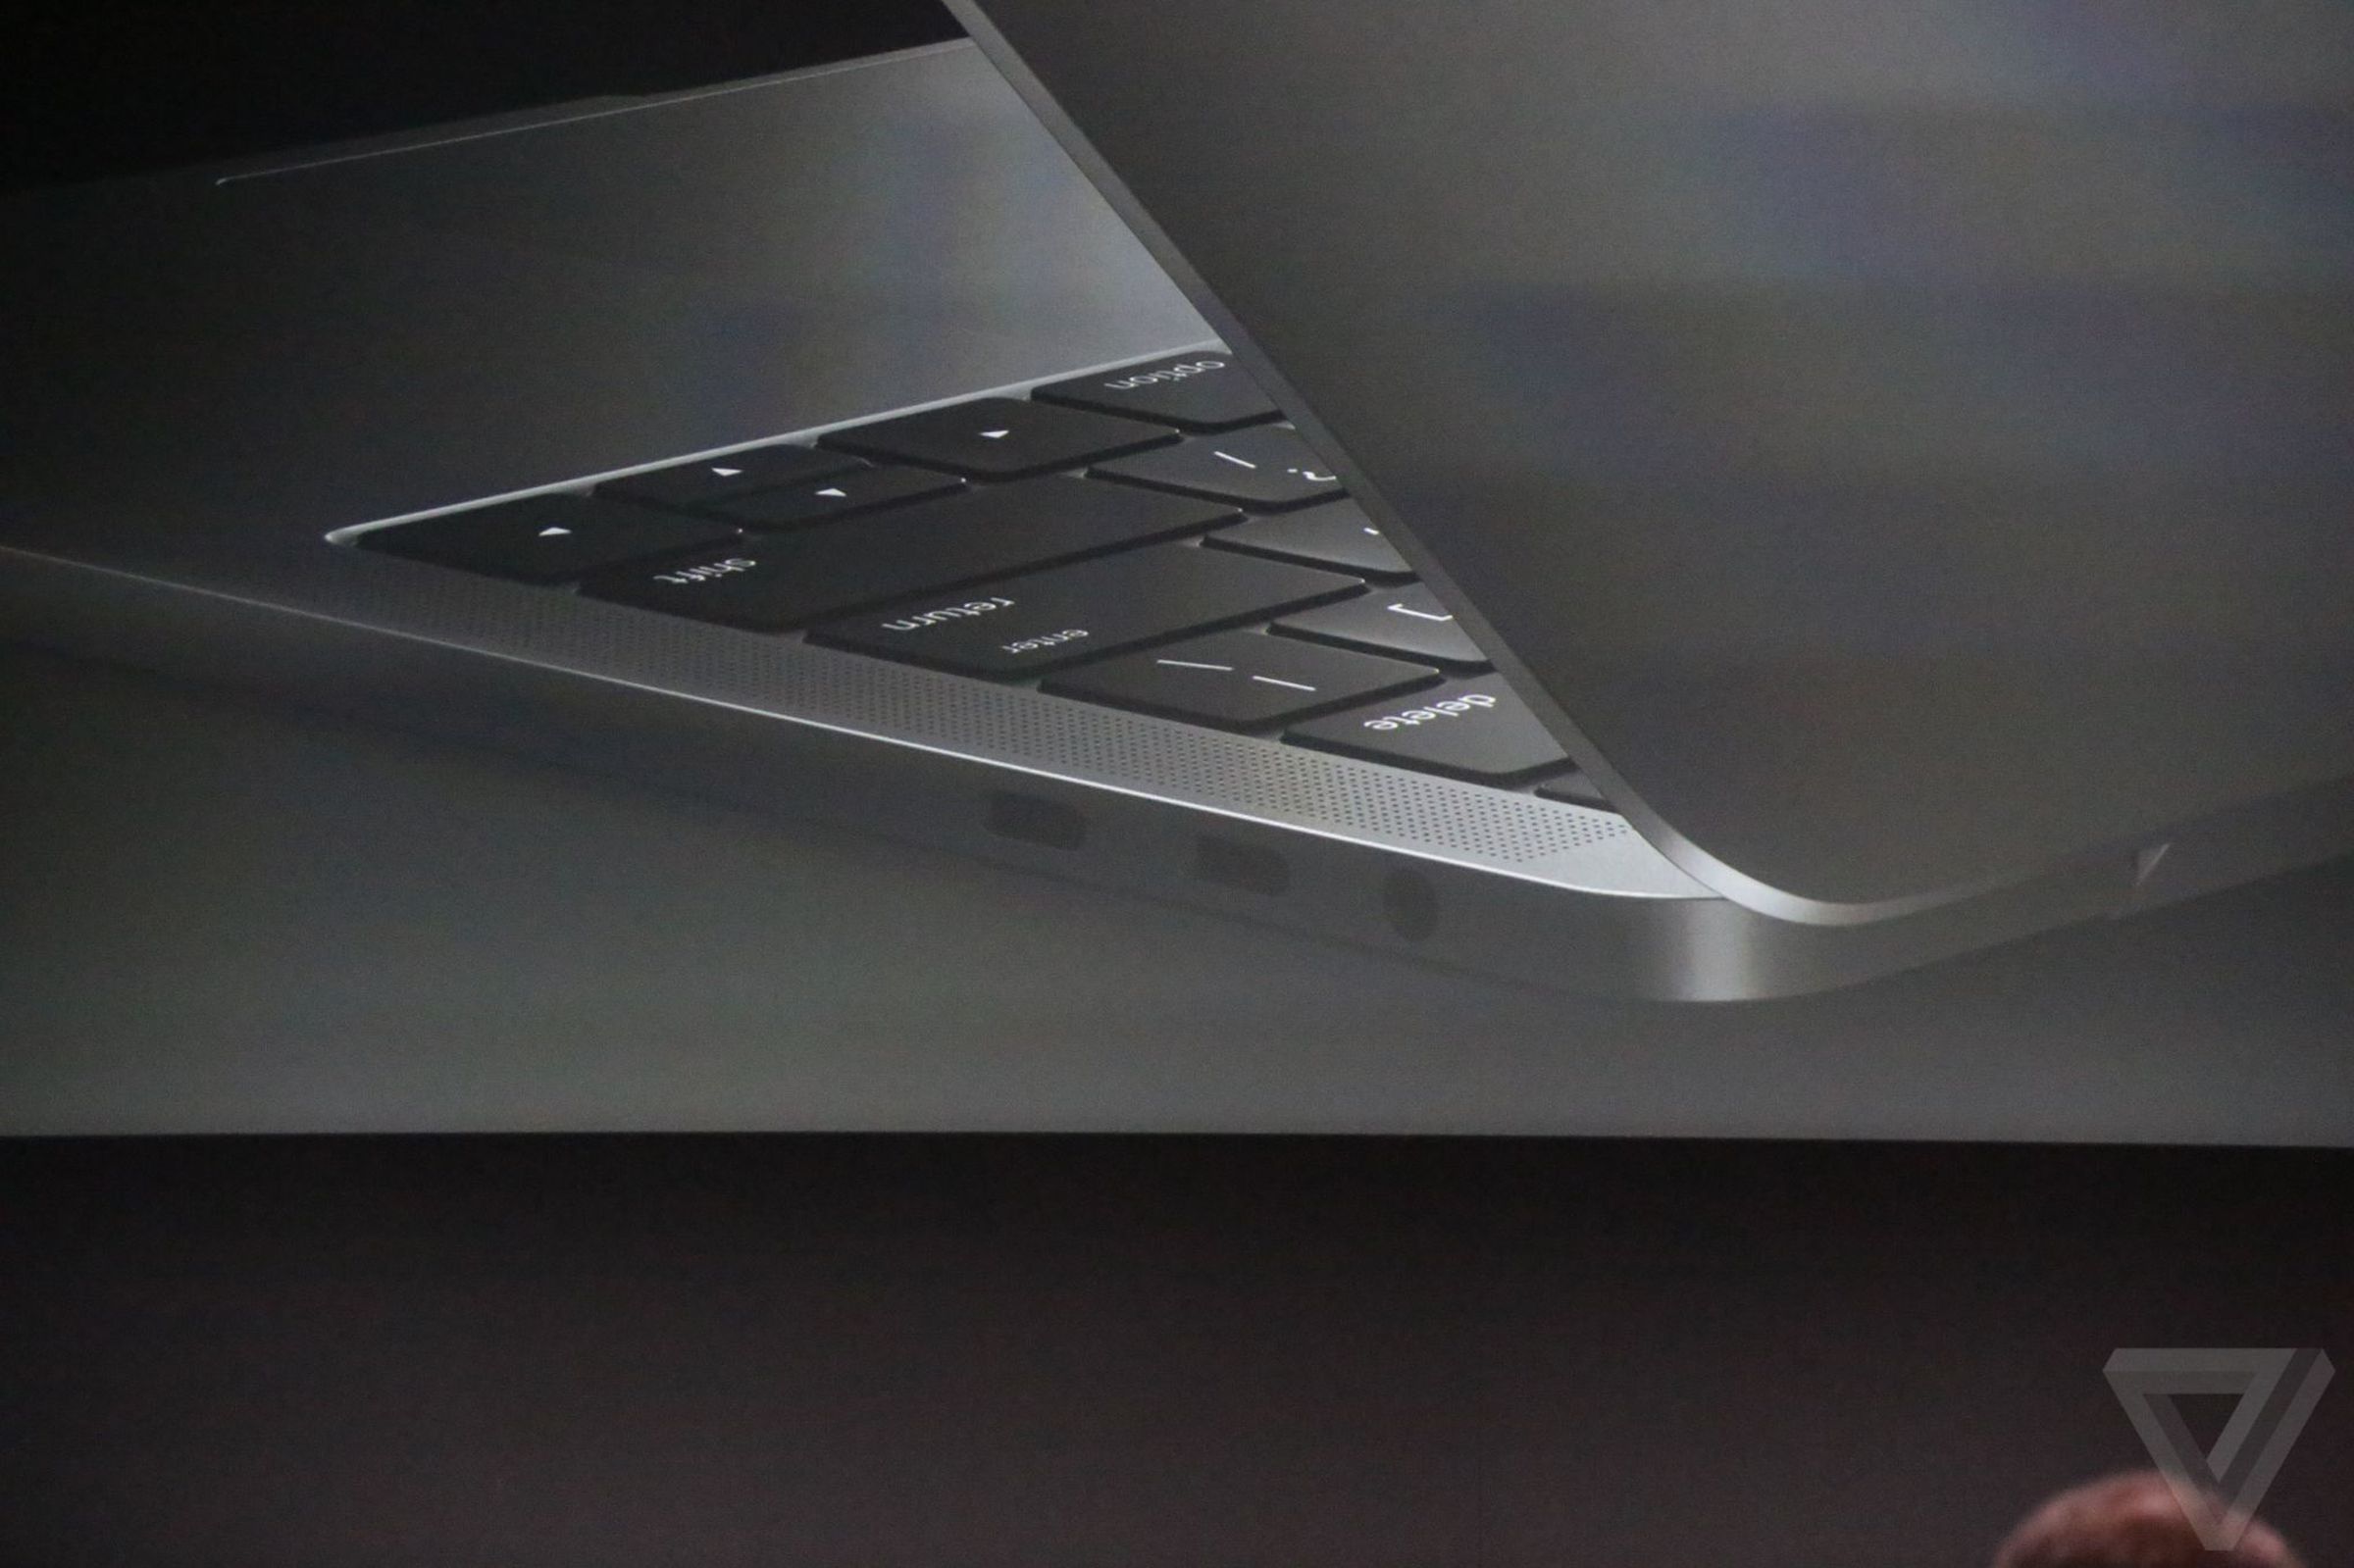 Apple October MacBook event introduces new MacBook Pro